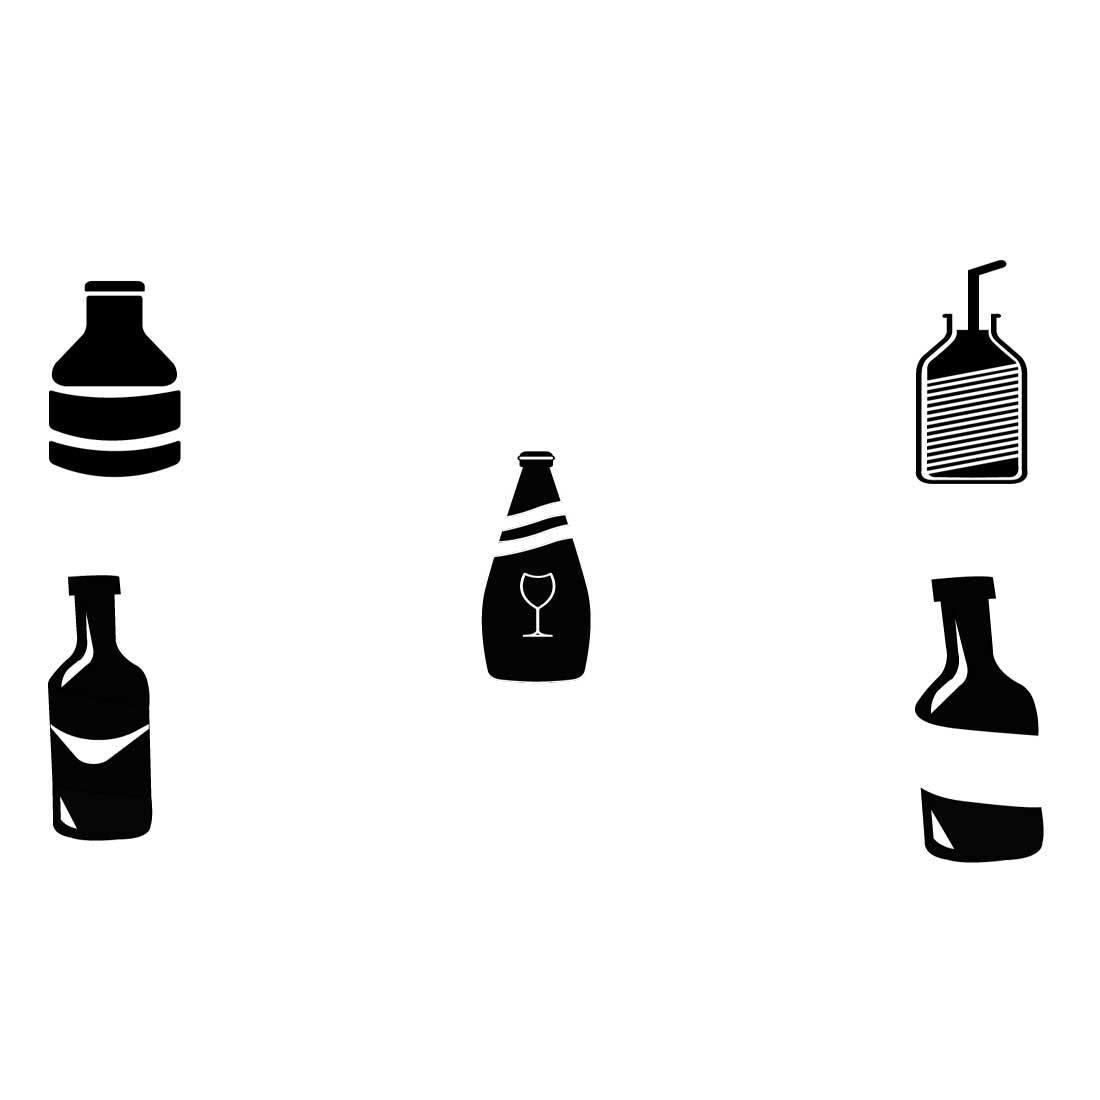 5 Bottle Icons Bundle cover image.